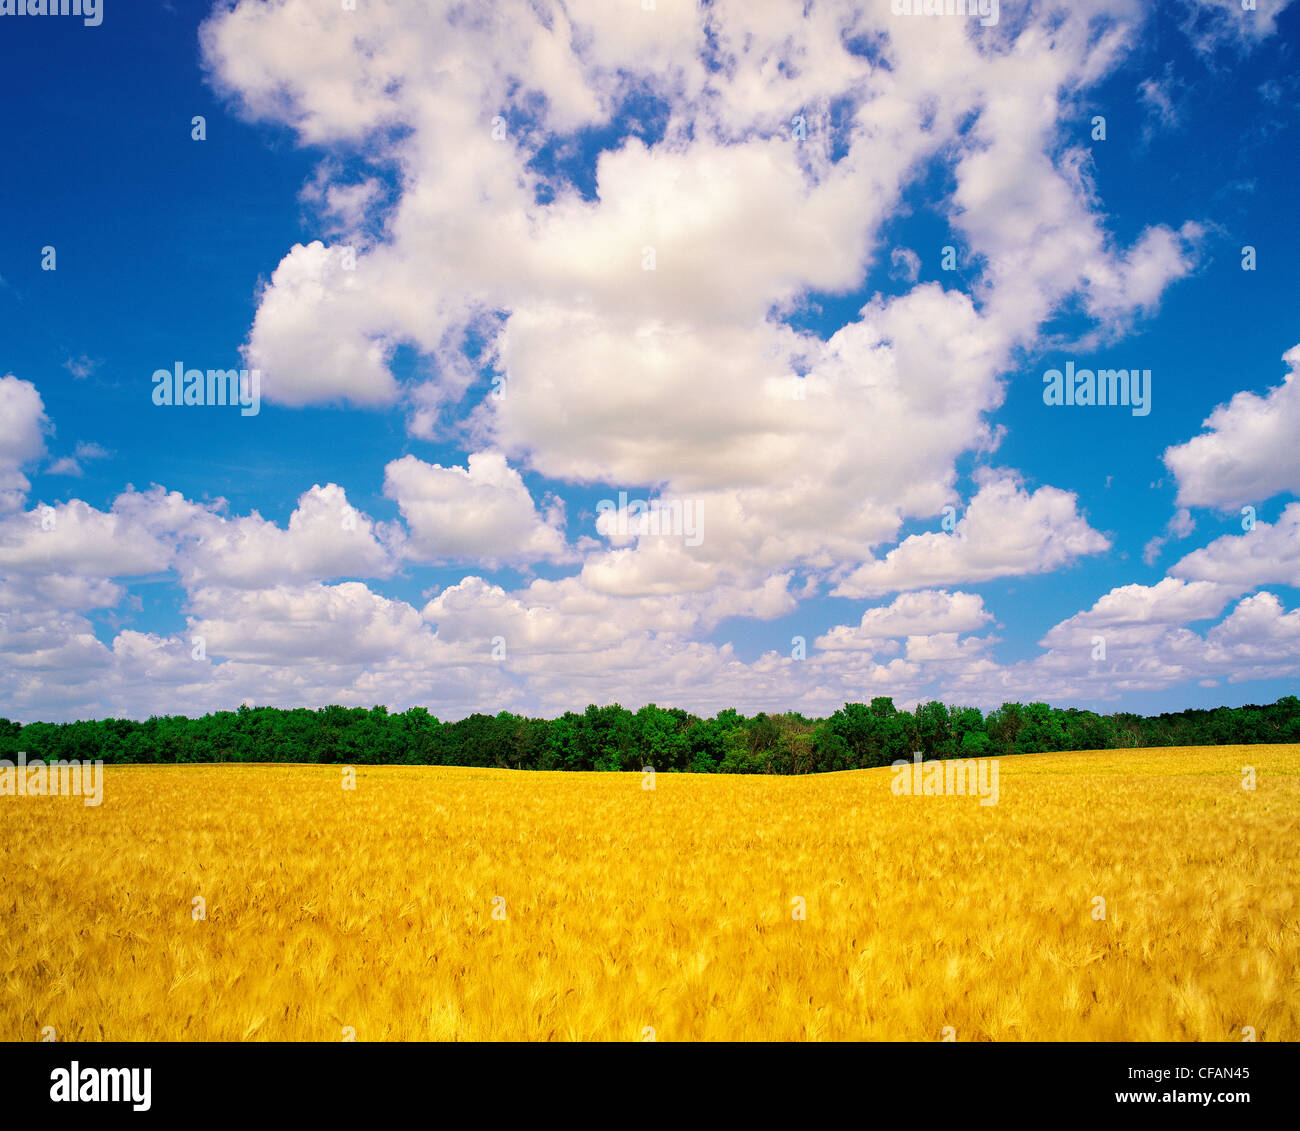 Mature barley crop and sky with cumulus clouds, near Carey, Manitoba, Canada Stock Photo